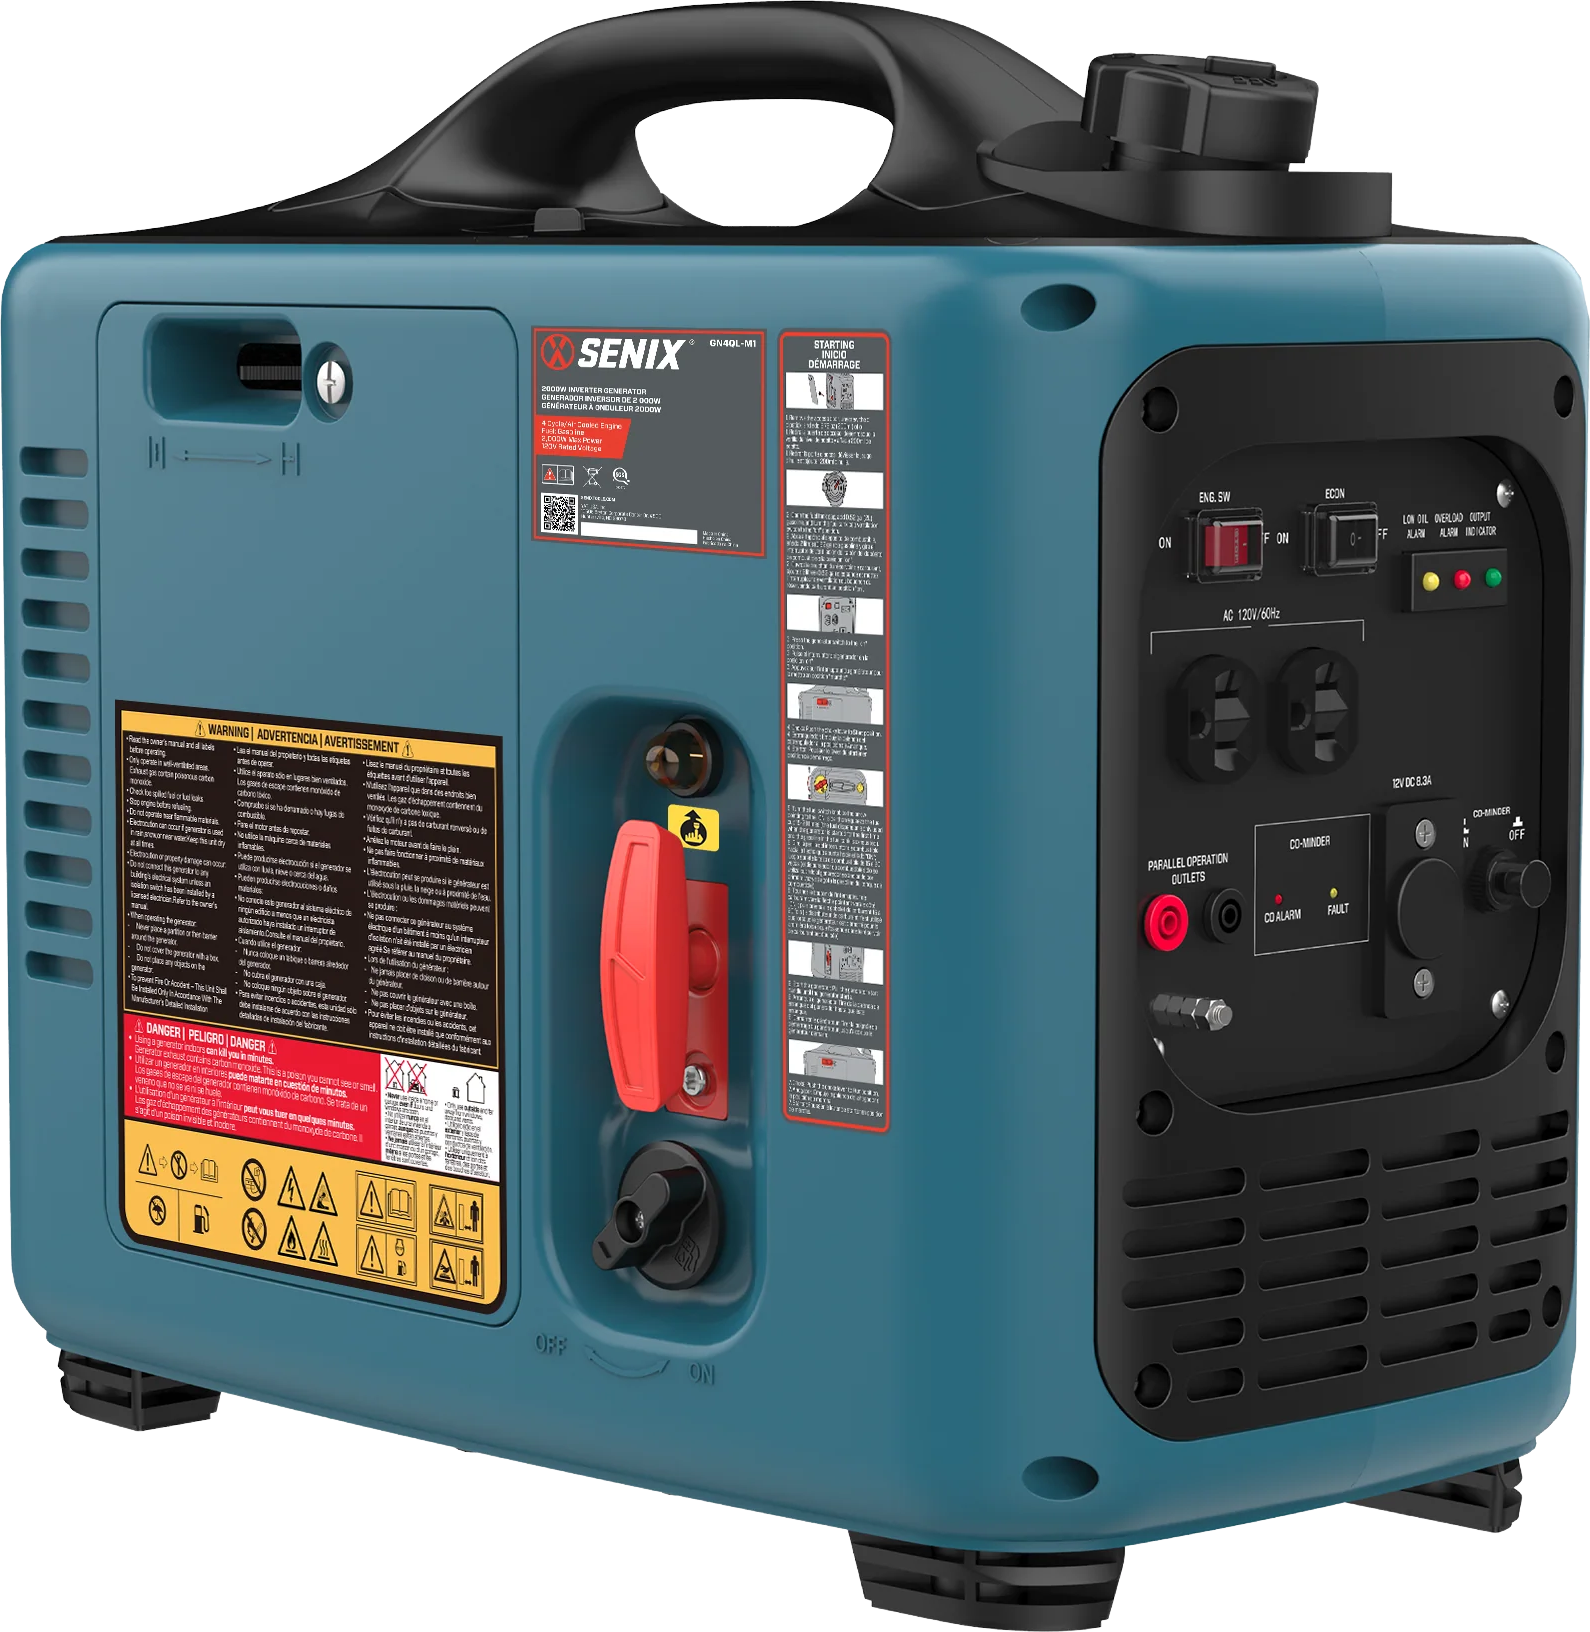 Senix GN4QL-M1 Gas Inverter Generator 2000W Portable New